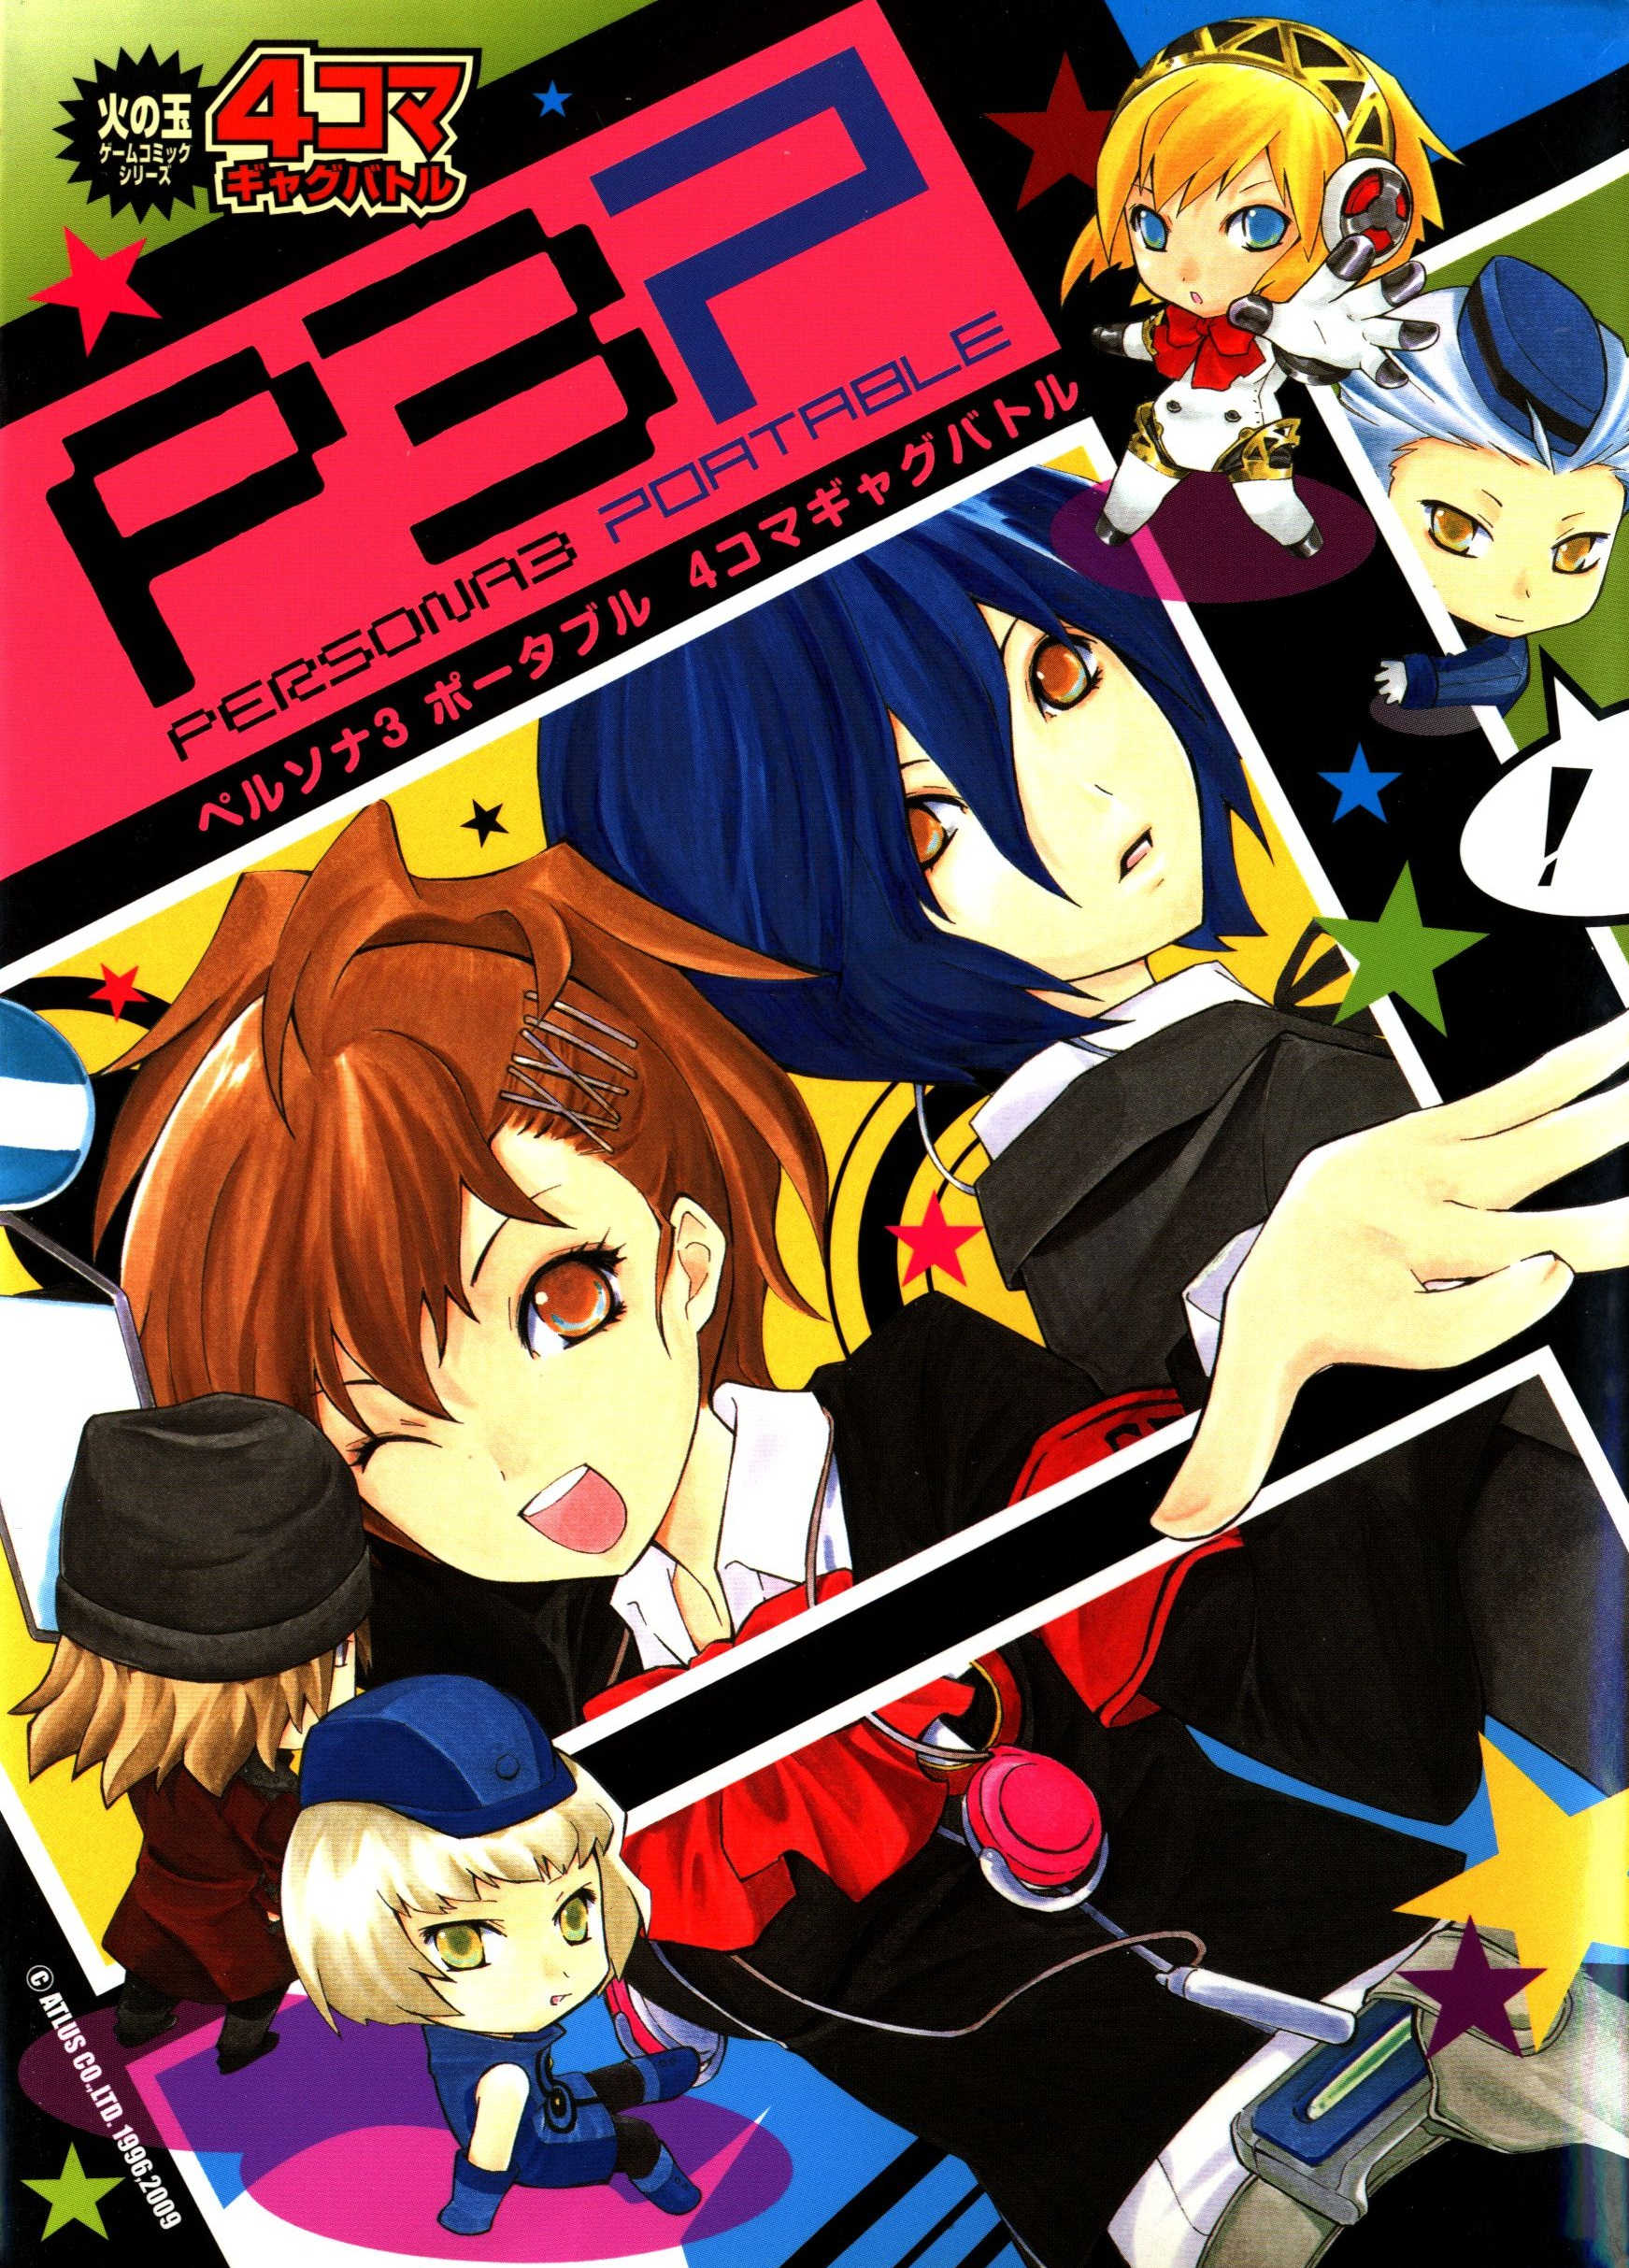 Persona 3 Portable 4Koma Gag Battle thumbnail